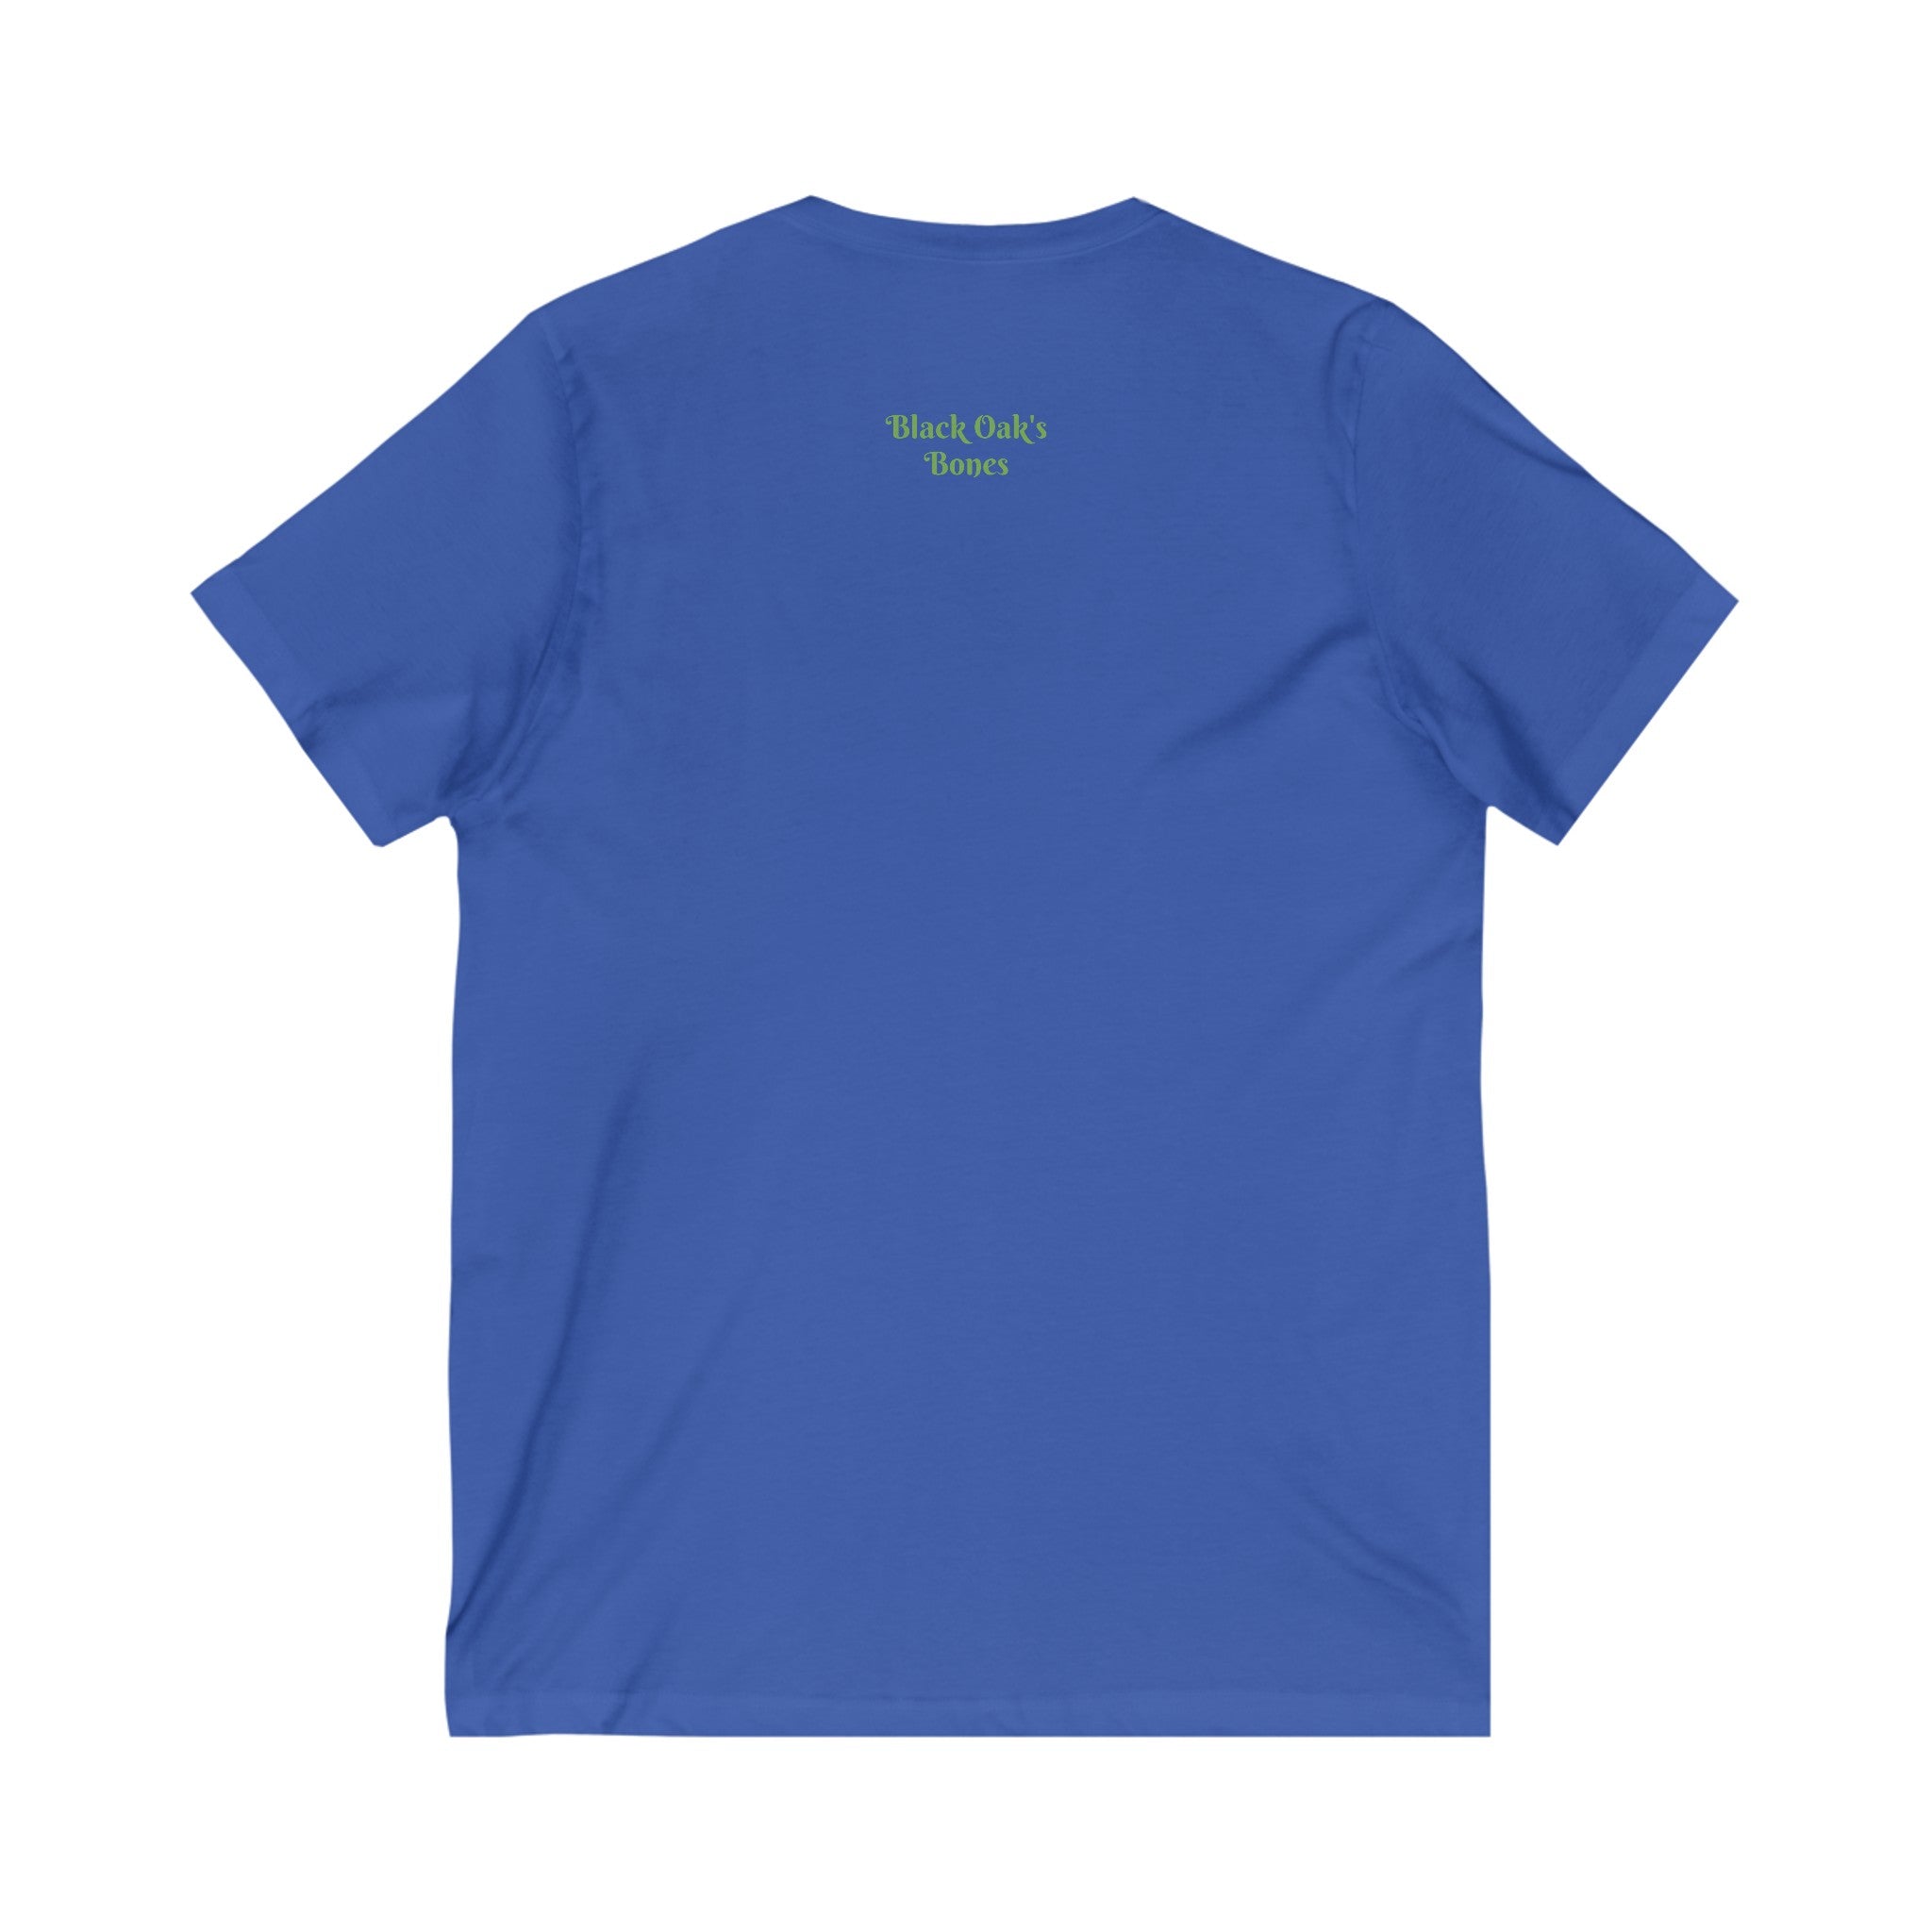 FURDreams “Honors Chemistry” V-Neck Tee Shirt